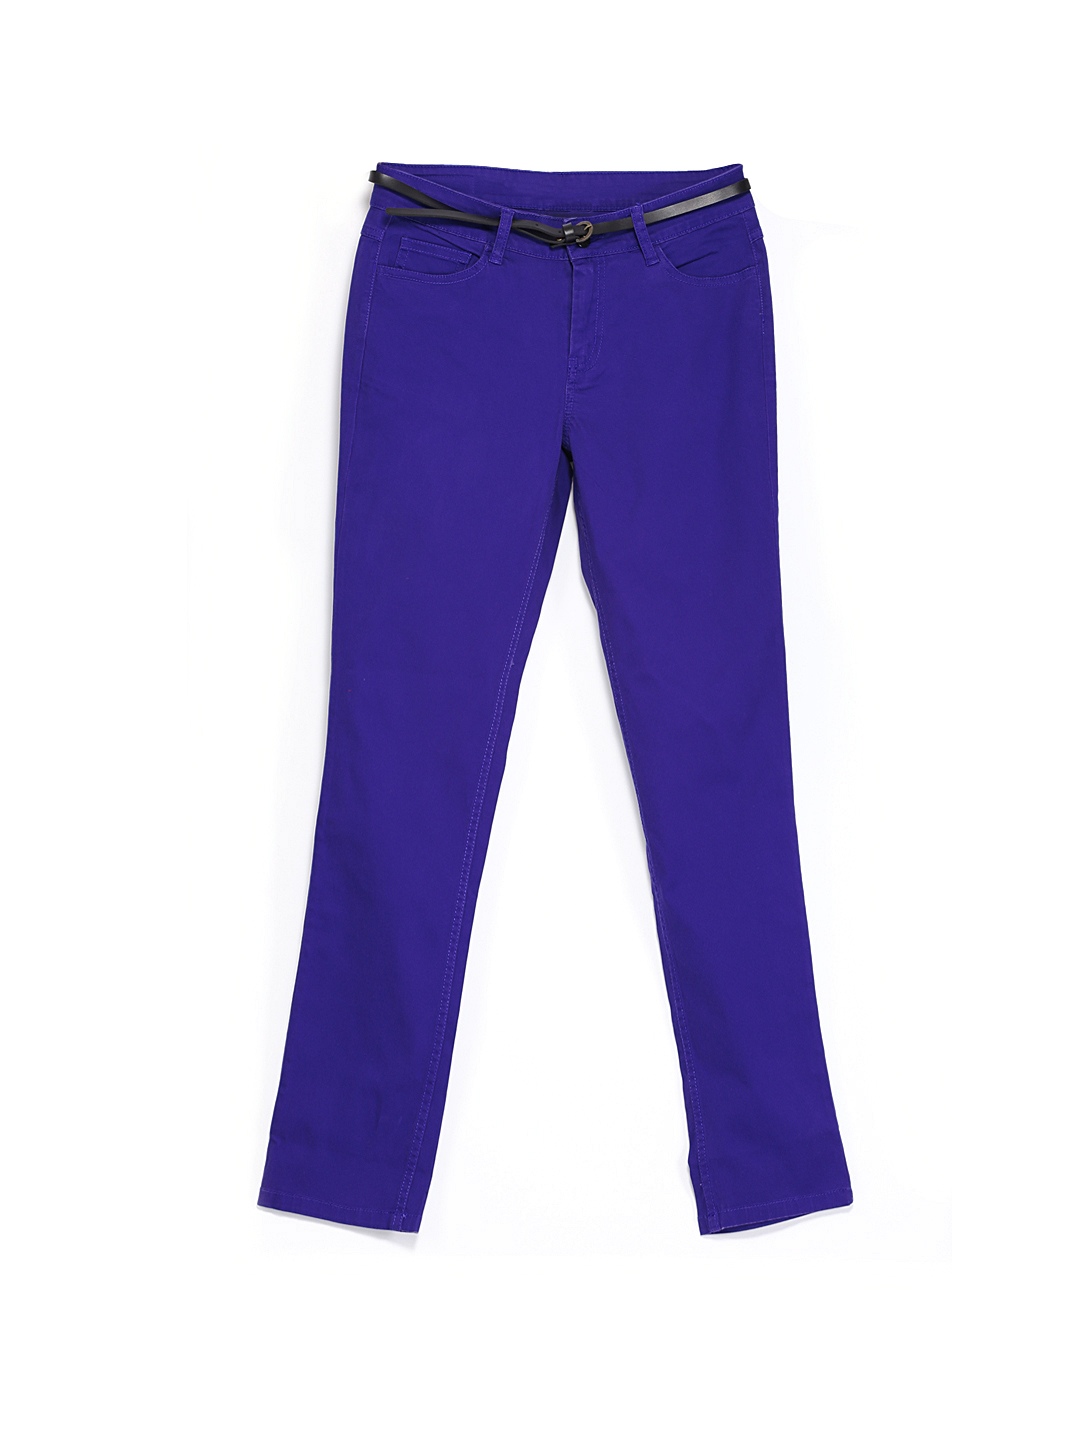 Myntra Vero Moda Women Royal Blue Trousers 320933 | Buy Myntra Vero